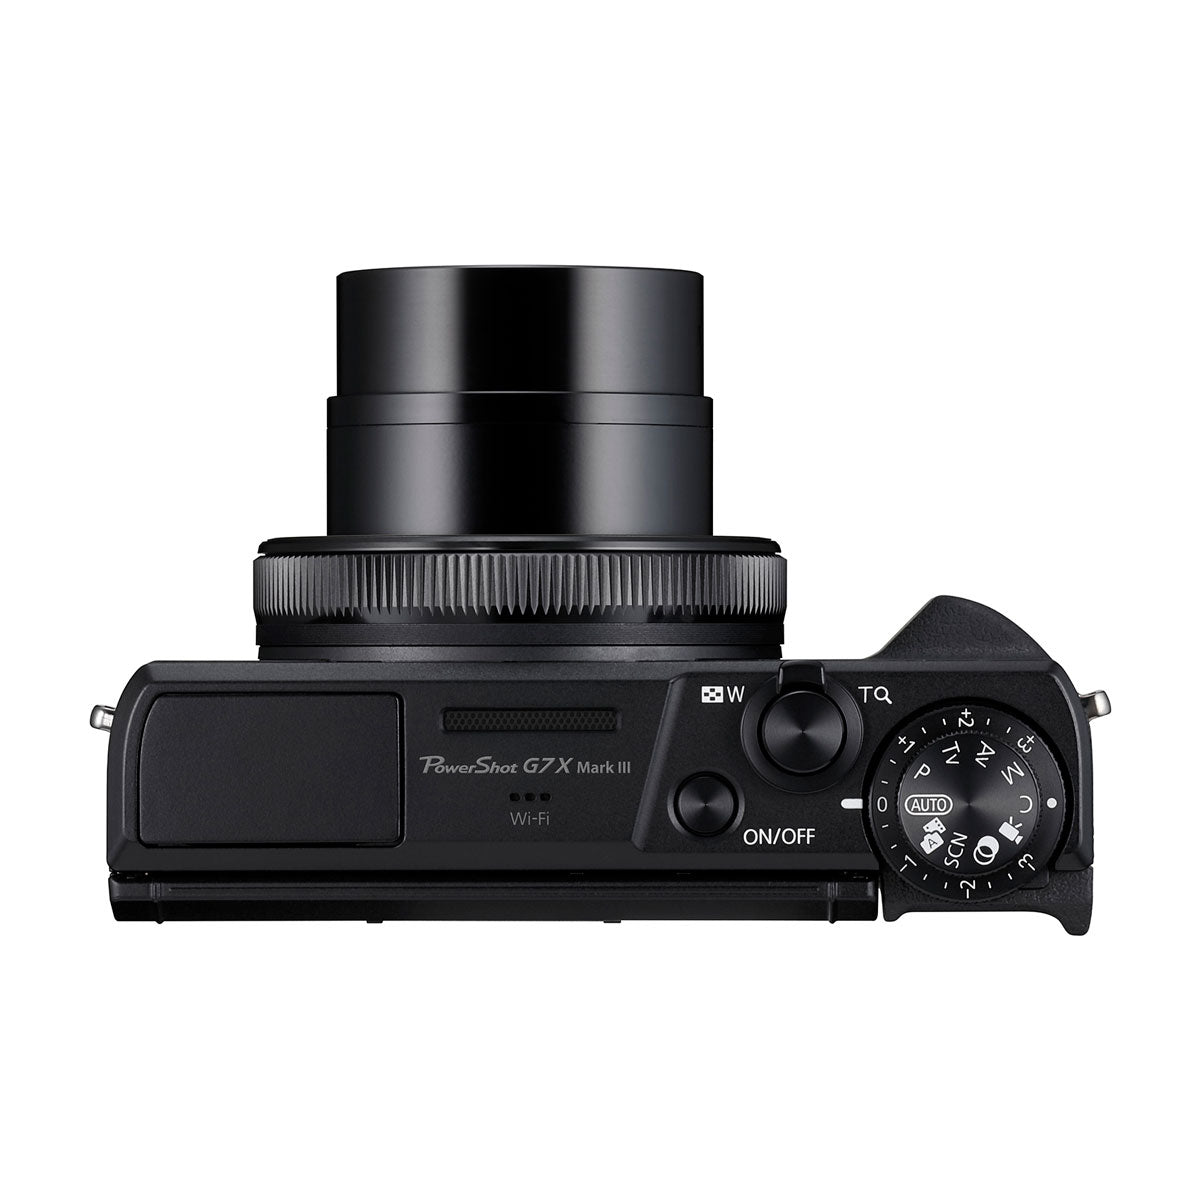 Canon PowerShot G7X Mark III Digital Camera (Black)